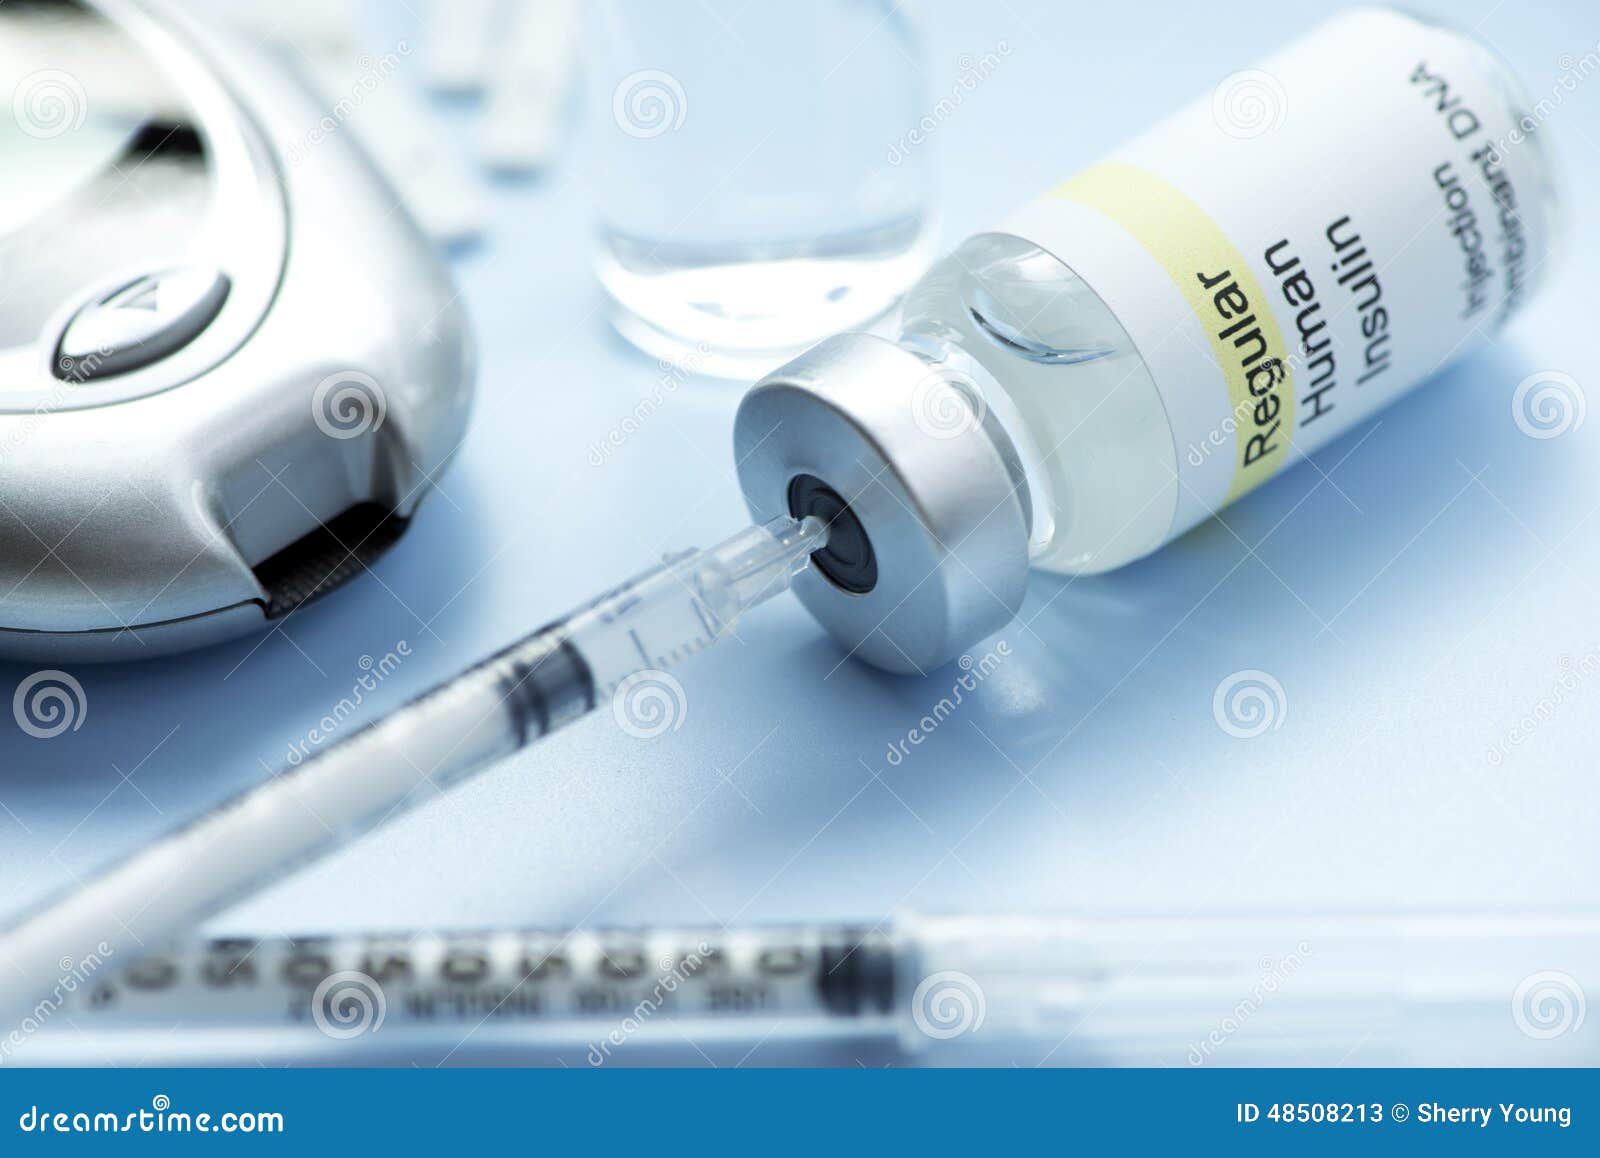 insulin needle